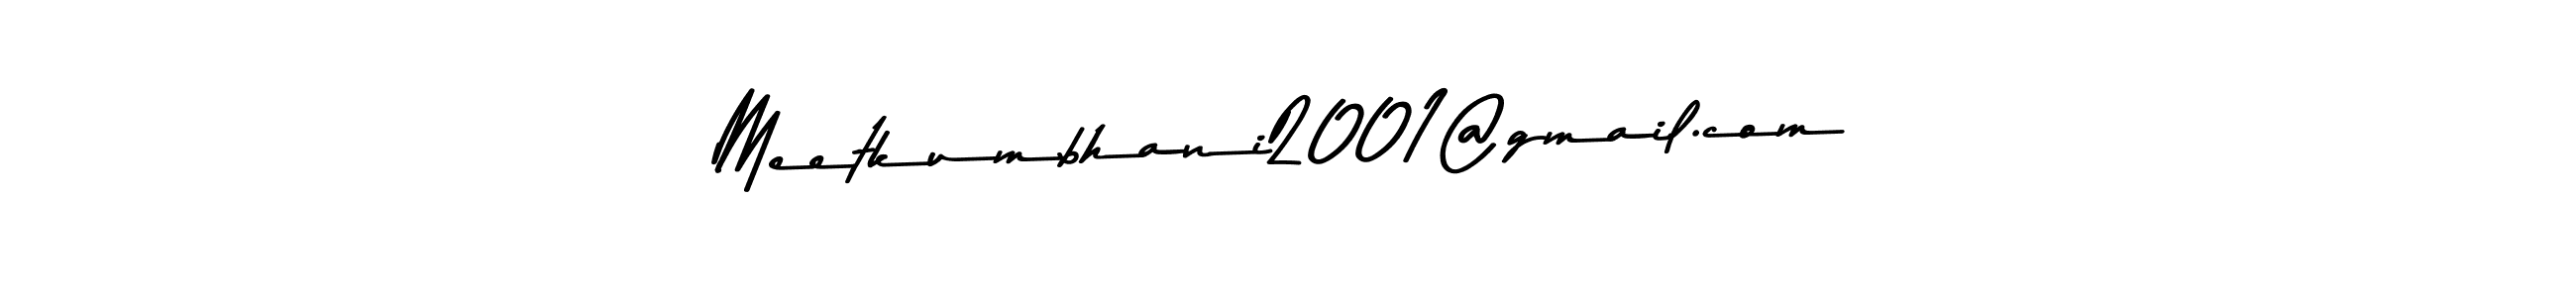 Meetkumbhani2001@gmail.com stylish signature style. Best Handwritten Sign (Asem Kandis PERSONAL USE) for my name. Handwritten Signature Collection Ideas for my name Meetkumbhani2001@gmail.com. Meetkumbhani2001@gmail.com signature style 9 images and pictures png